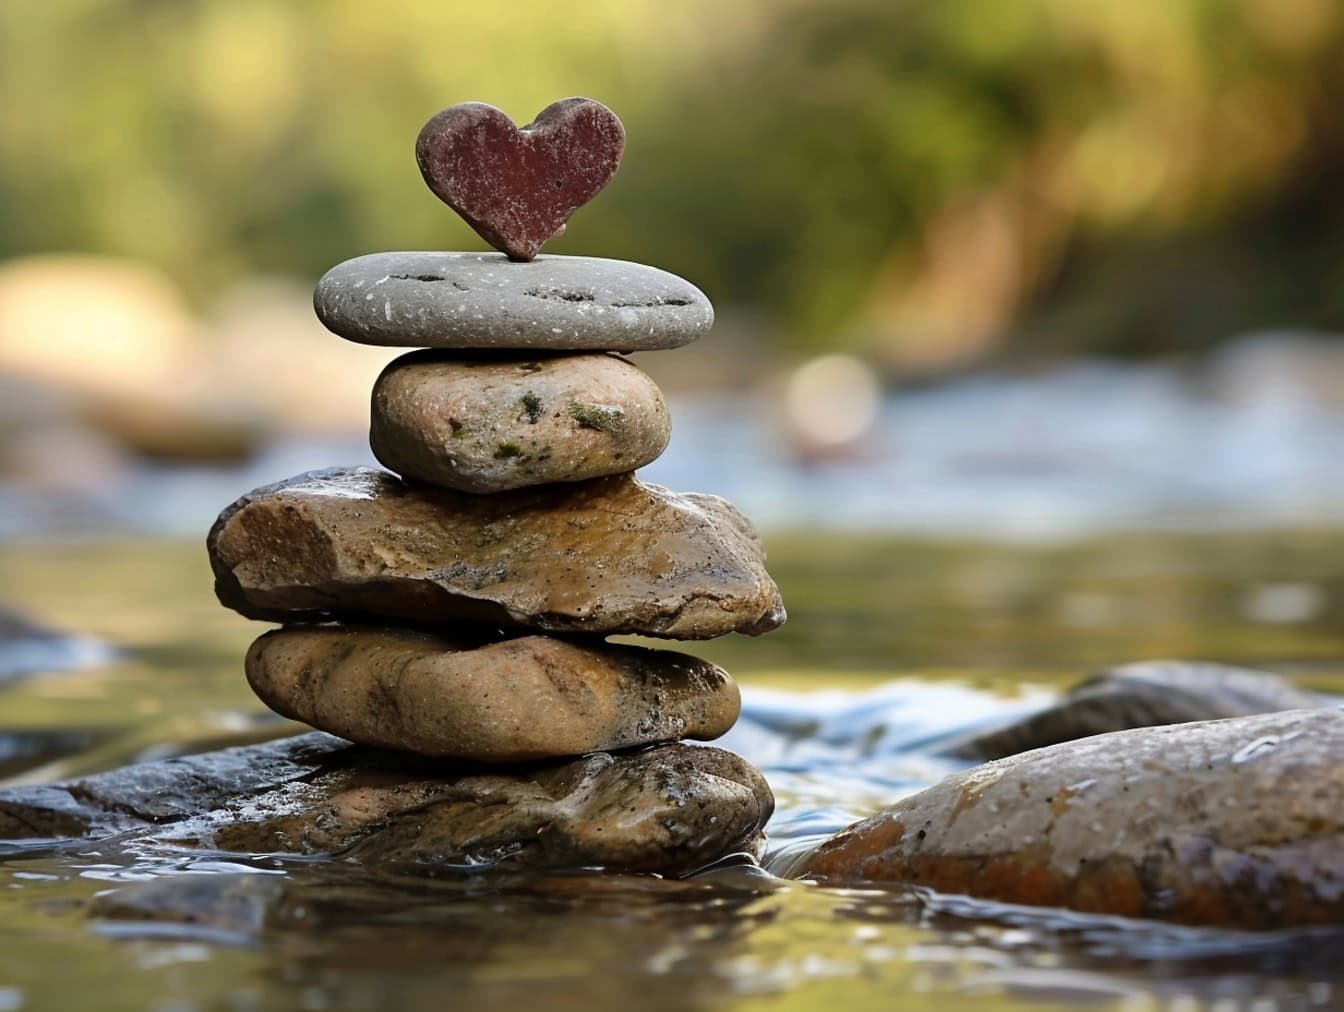 Batu-batu bertumpuk di atas satu sama lain di tepi sungai dengan batu berbentuk hati di bagian atas, ilustrasi keseimbangan dan harmoni dalam cinta